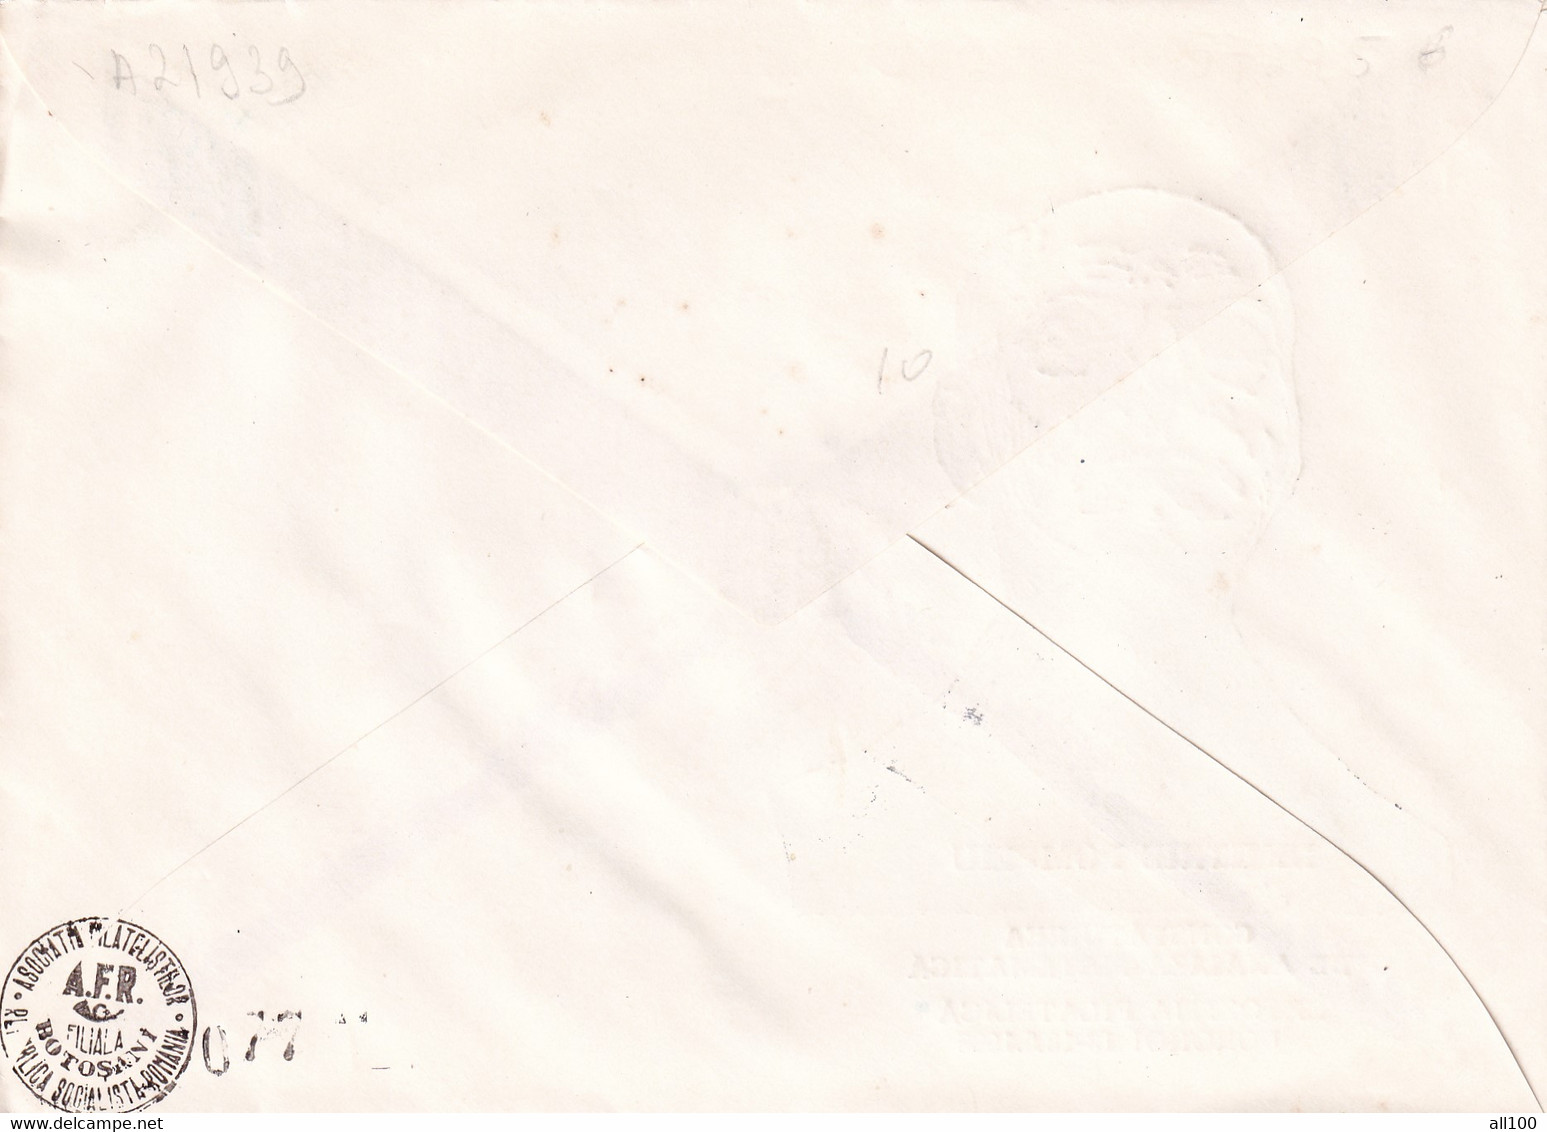 A21939 - Dimitrie Pompeiu Consfatuirea De Analiza Matematica Expozitia Filatelica Dorohoi Cover Envelope Used 1985 RSR - Cartas & Documentos